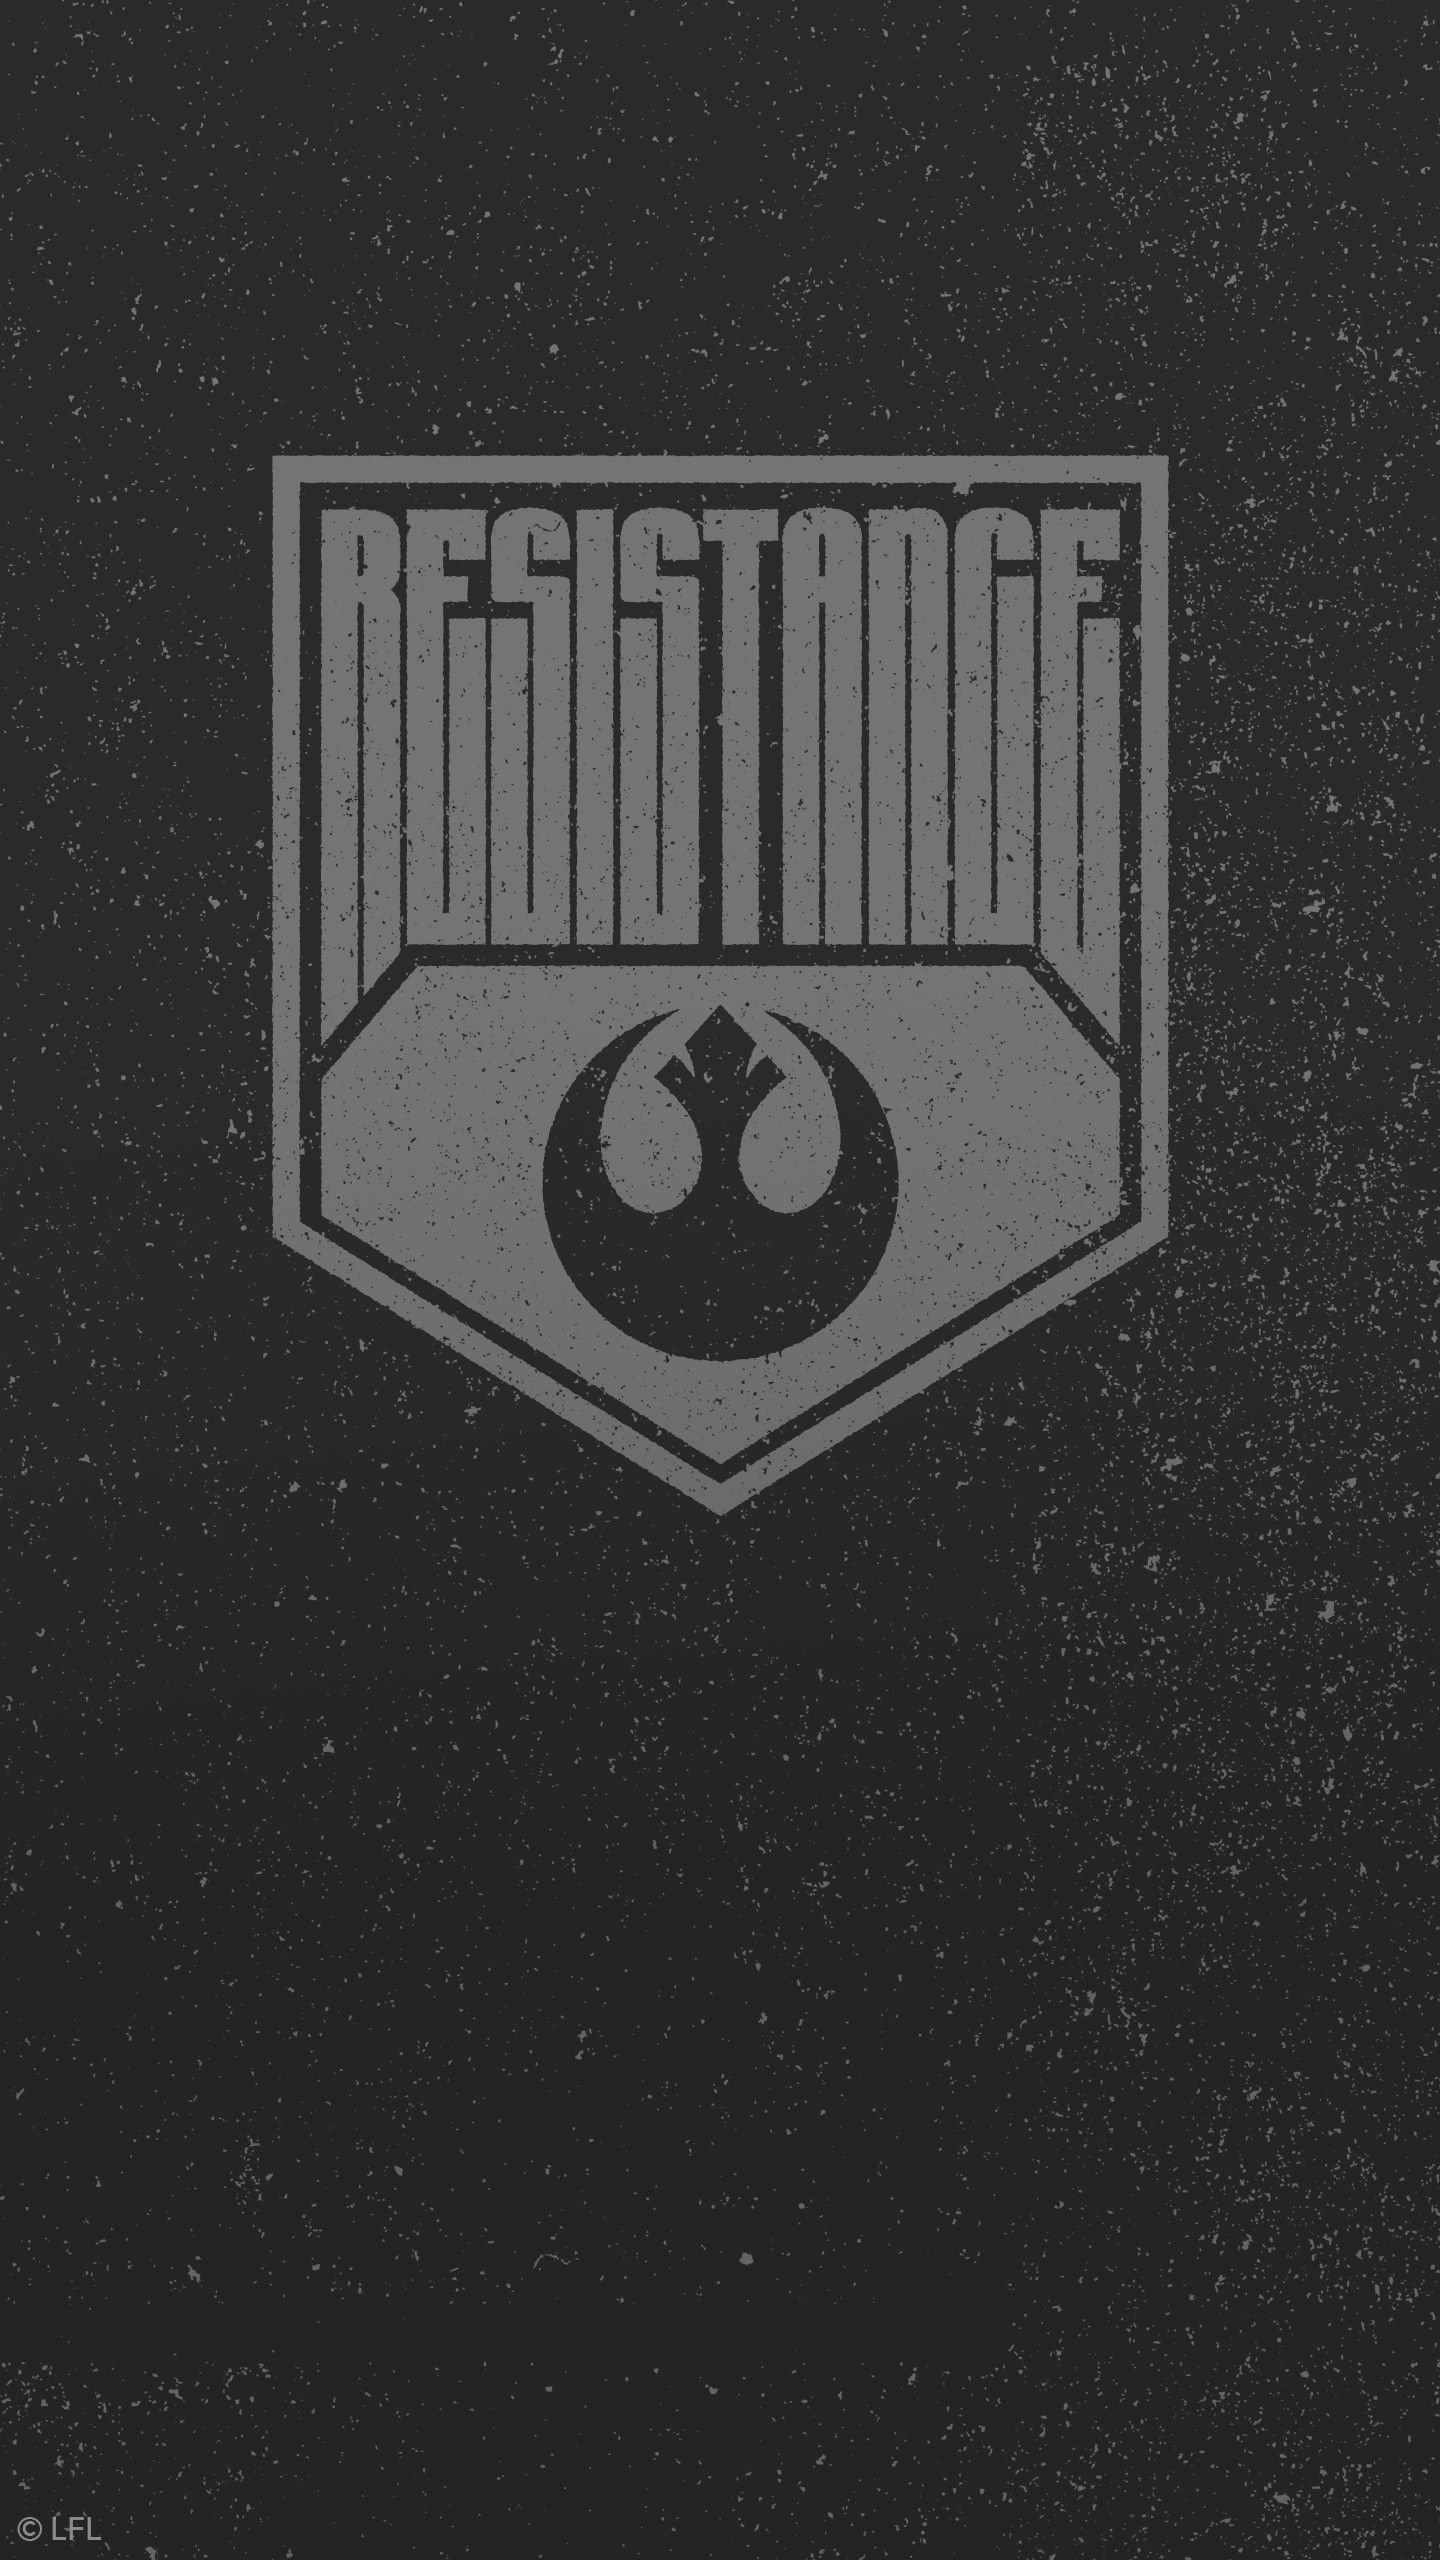 Star Wars The Force Awakens Wallpaper